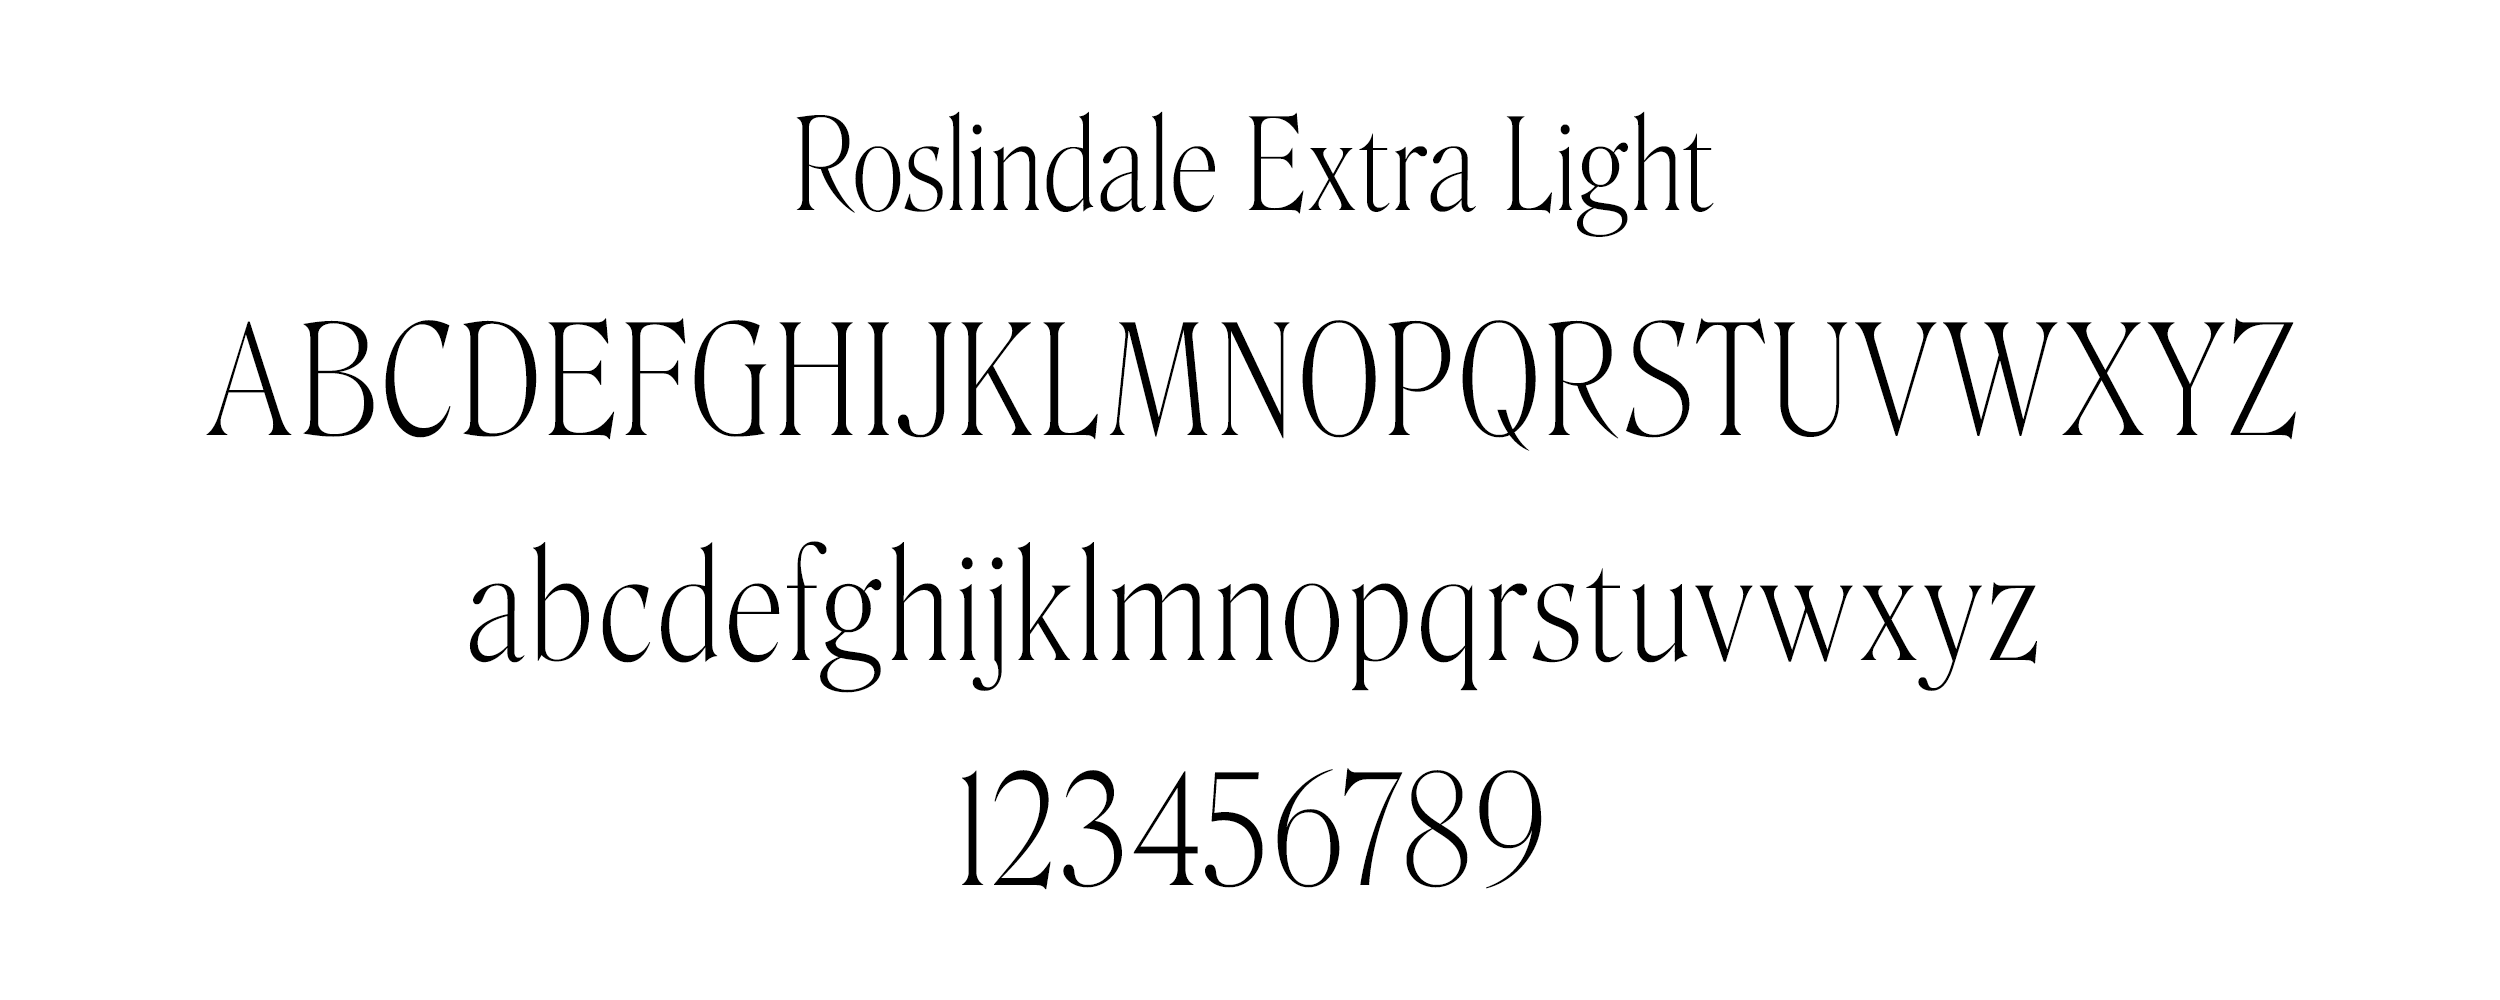 Roslindale-type-system